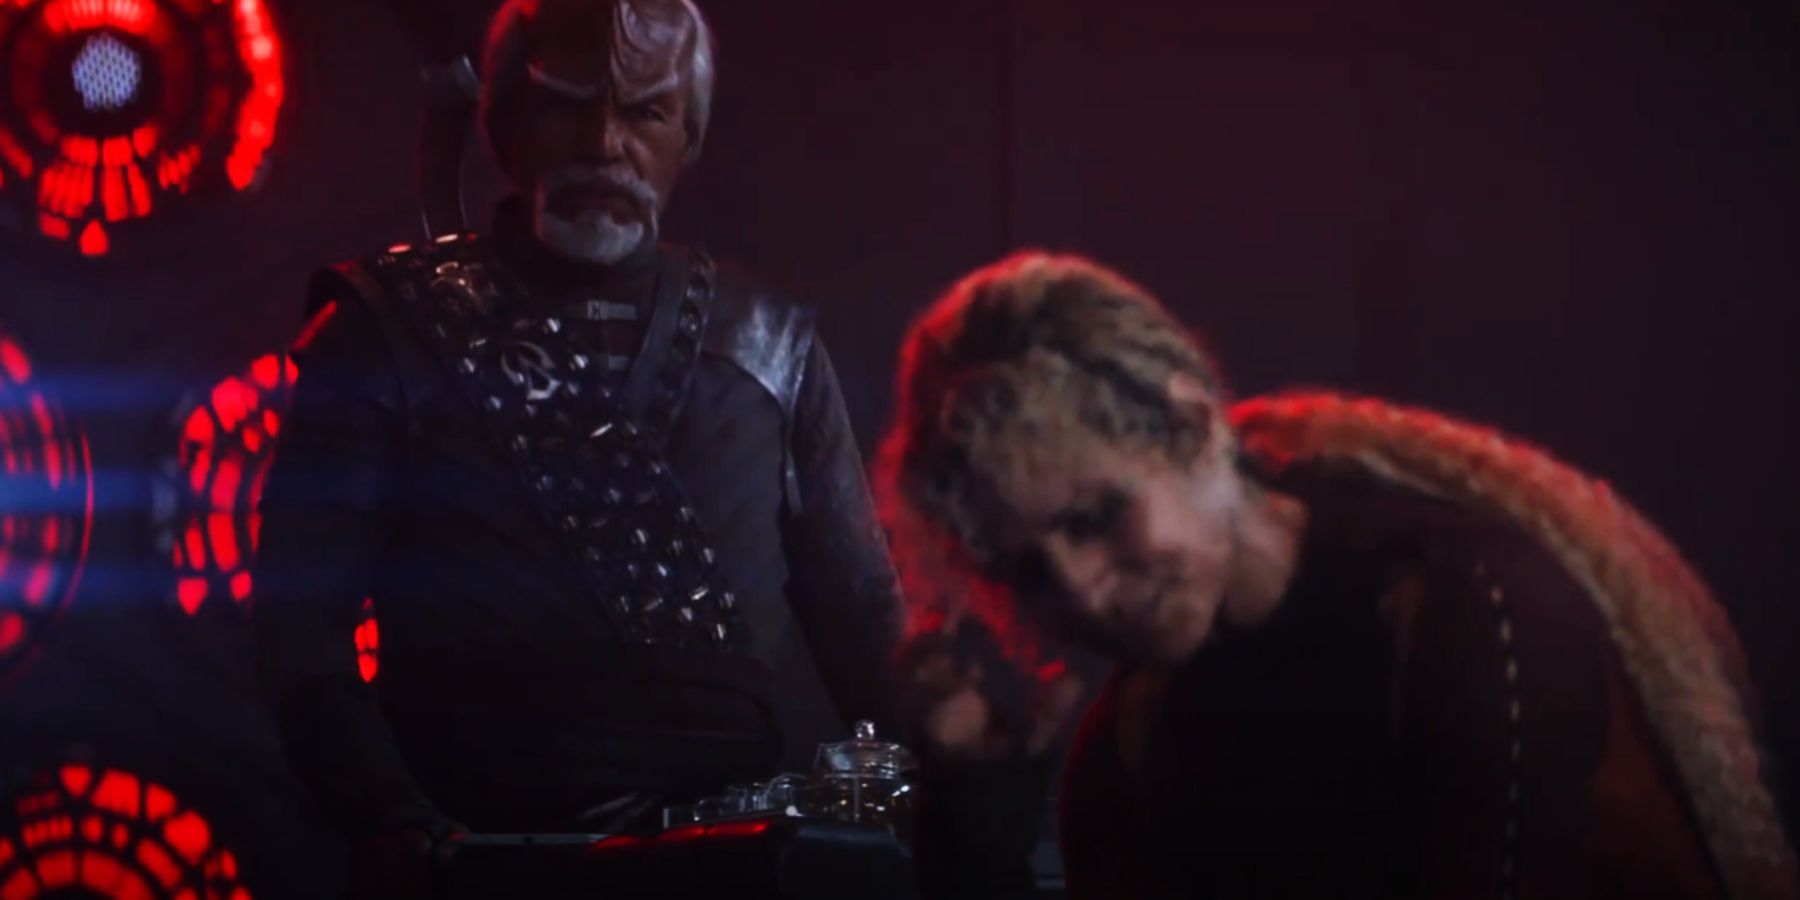 Worf makes chamomile tea for Raffi in Picard season 3